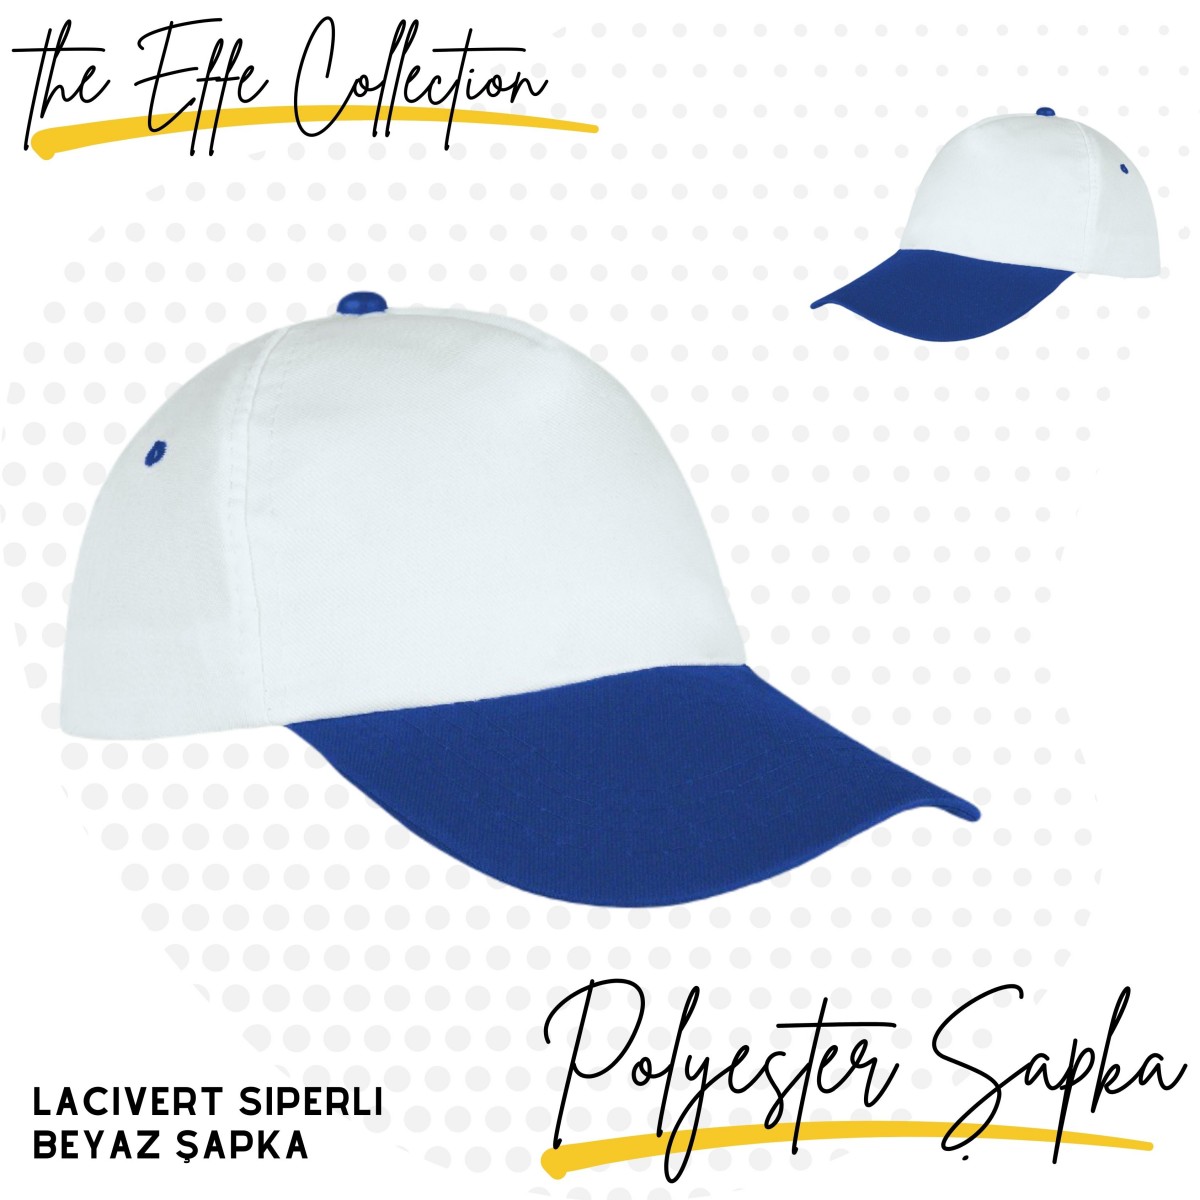 Polyester Şapka Lacivert Siperli Beyaz